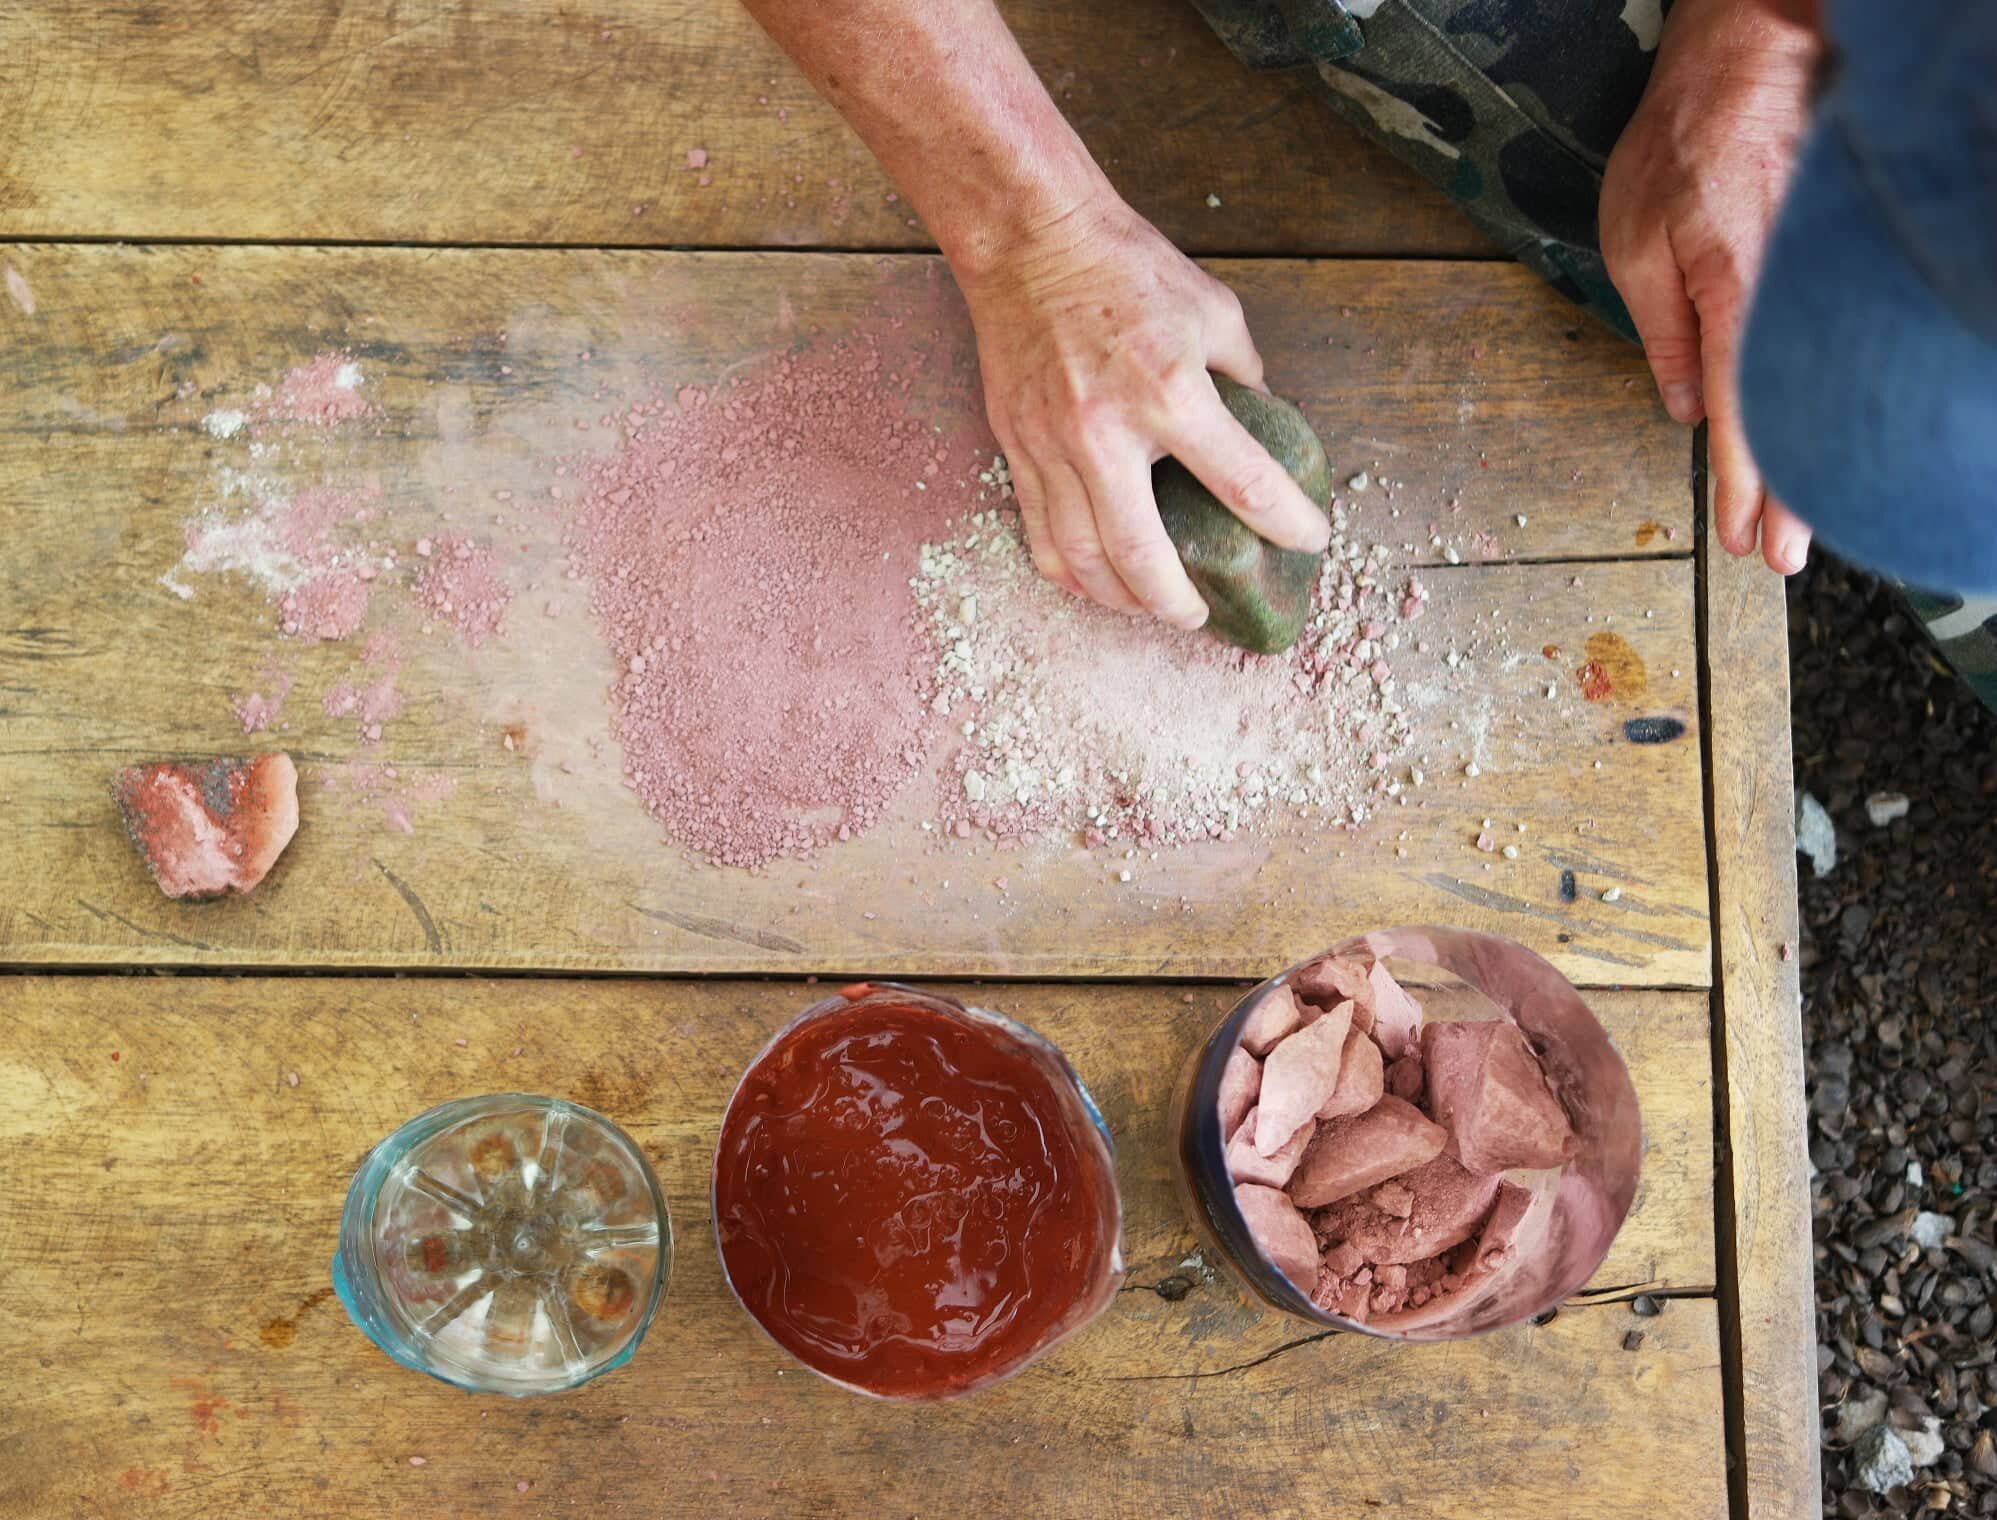 Make Natural Paint from Clay — Sueño de Vida